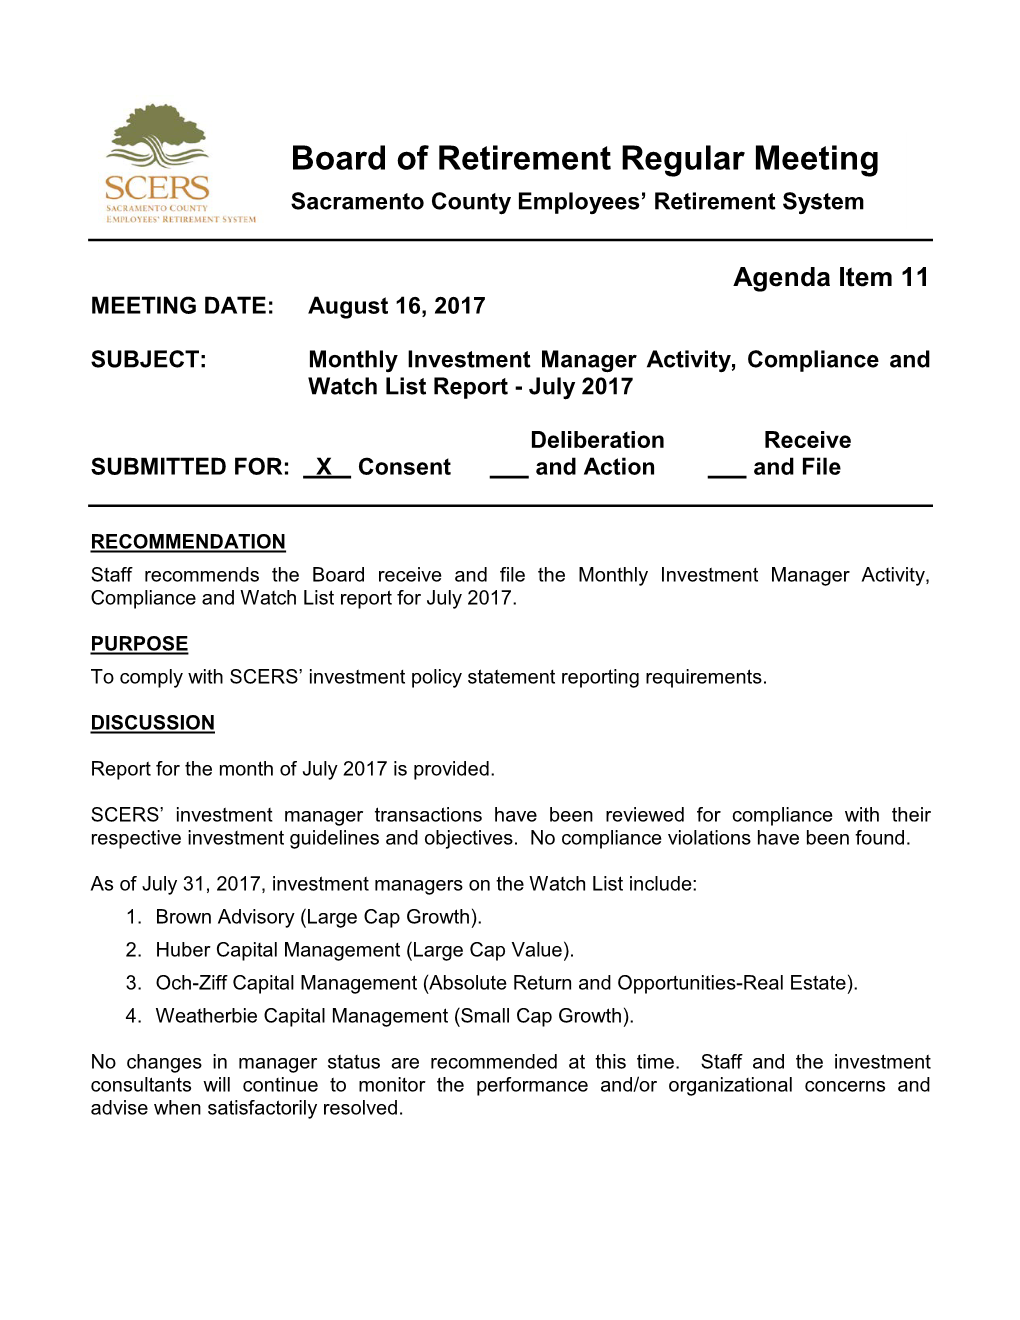 Item 11 MEETING DATE: August 16, 2017